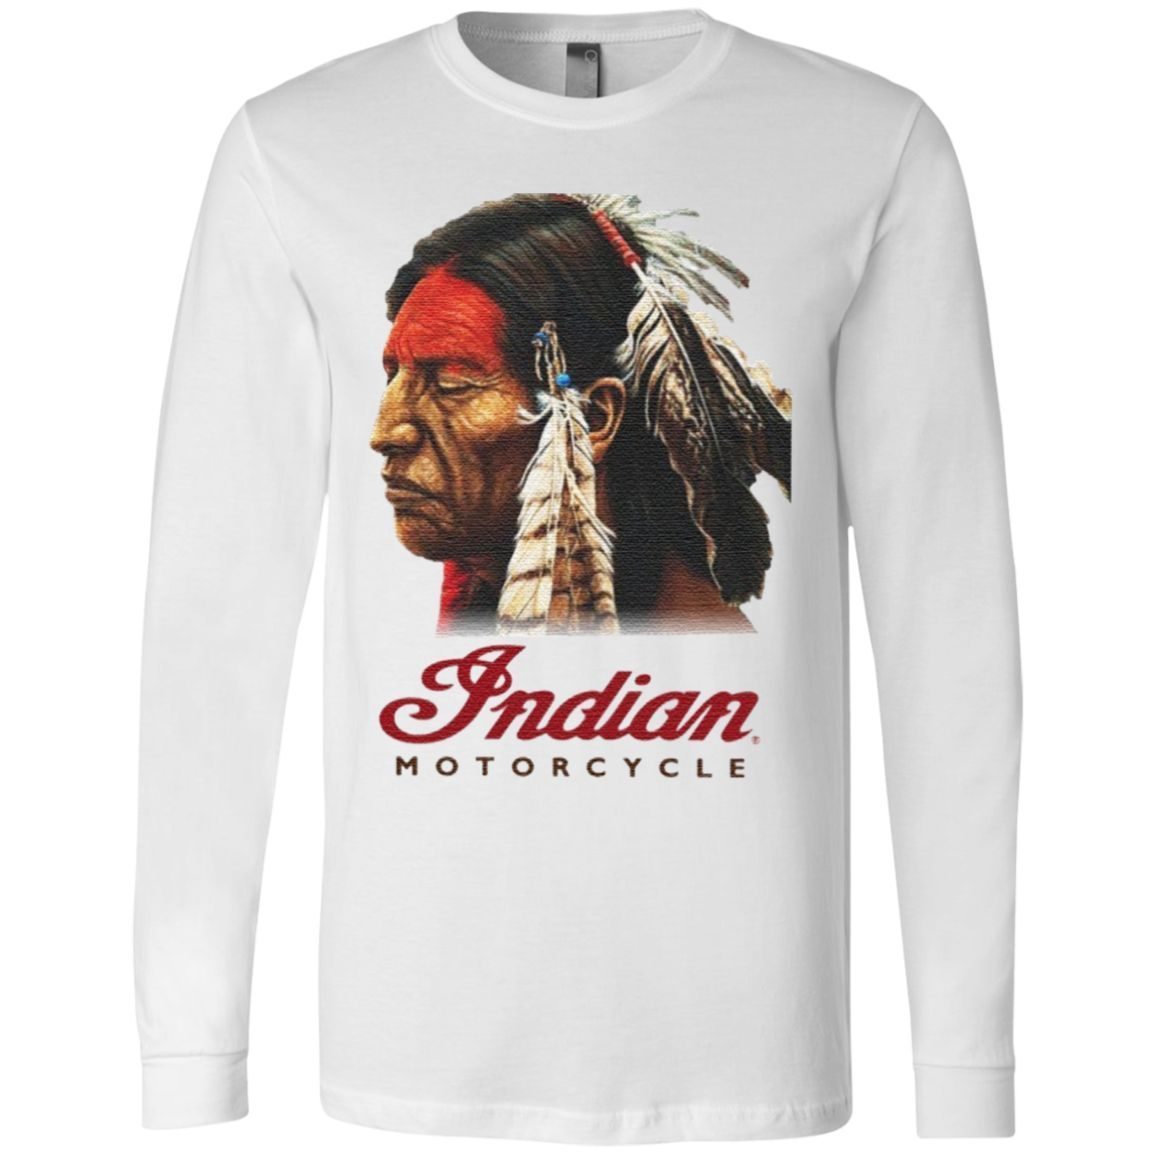 Indian Motorcycle T Shirt